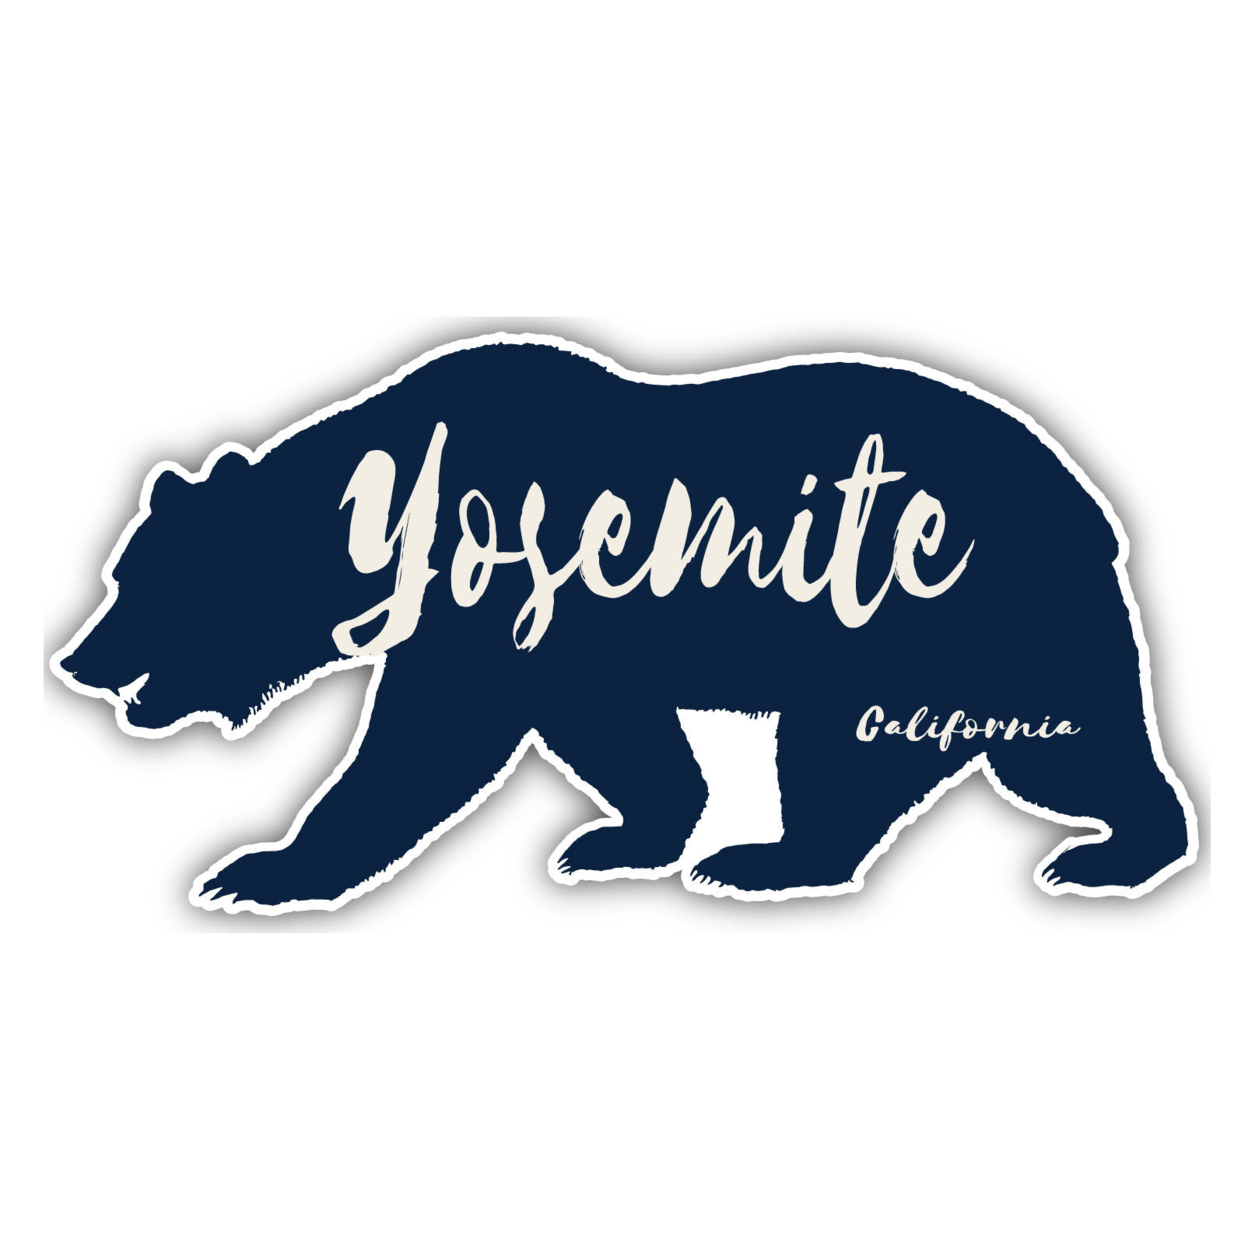 Yosemite California Souvenir Decorative Stickers (Choose Theme And Size) - Single Unit, 2-Inch, Bear